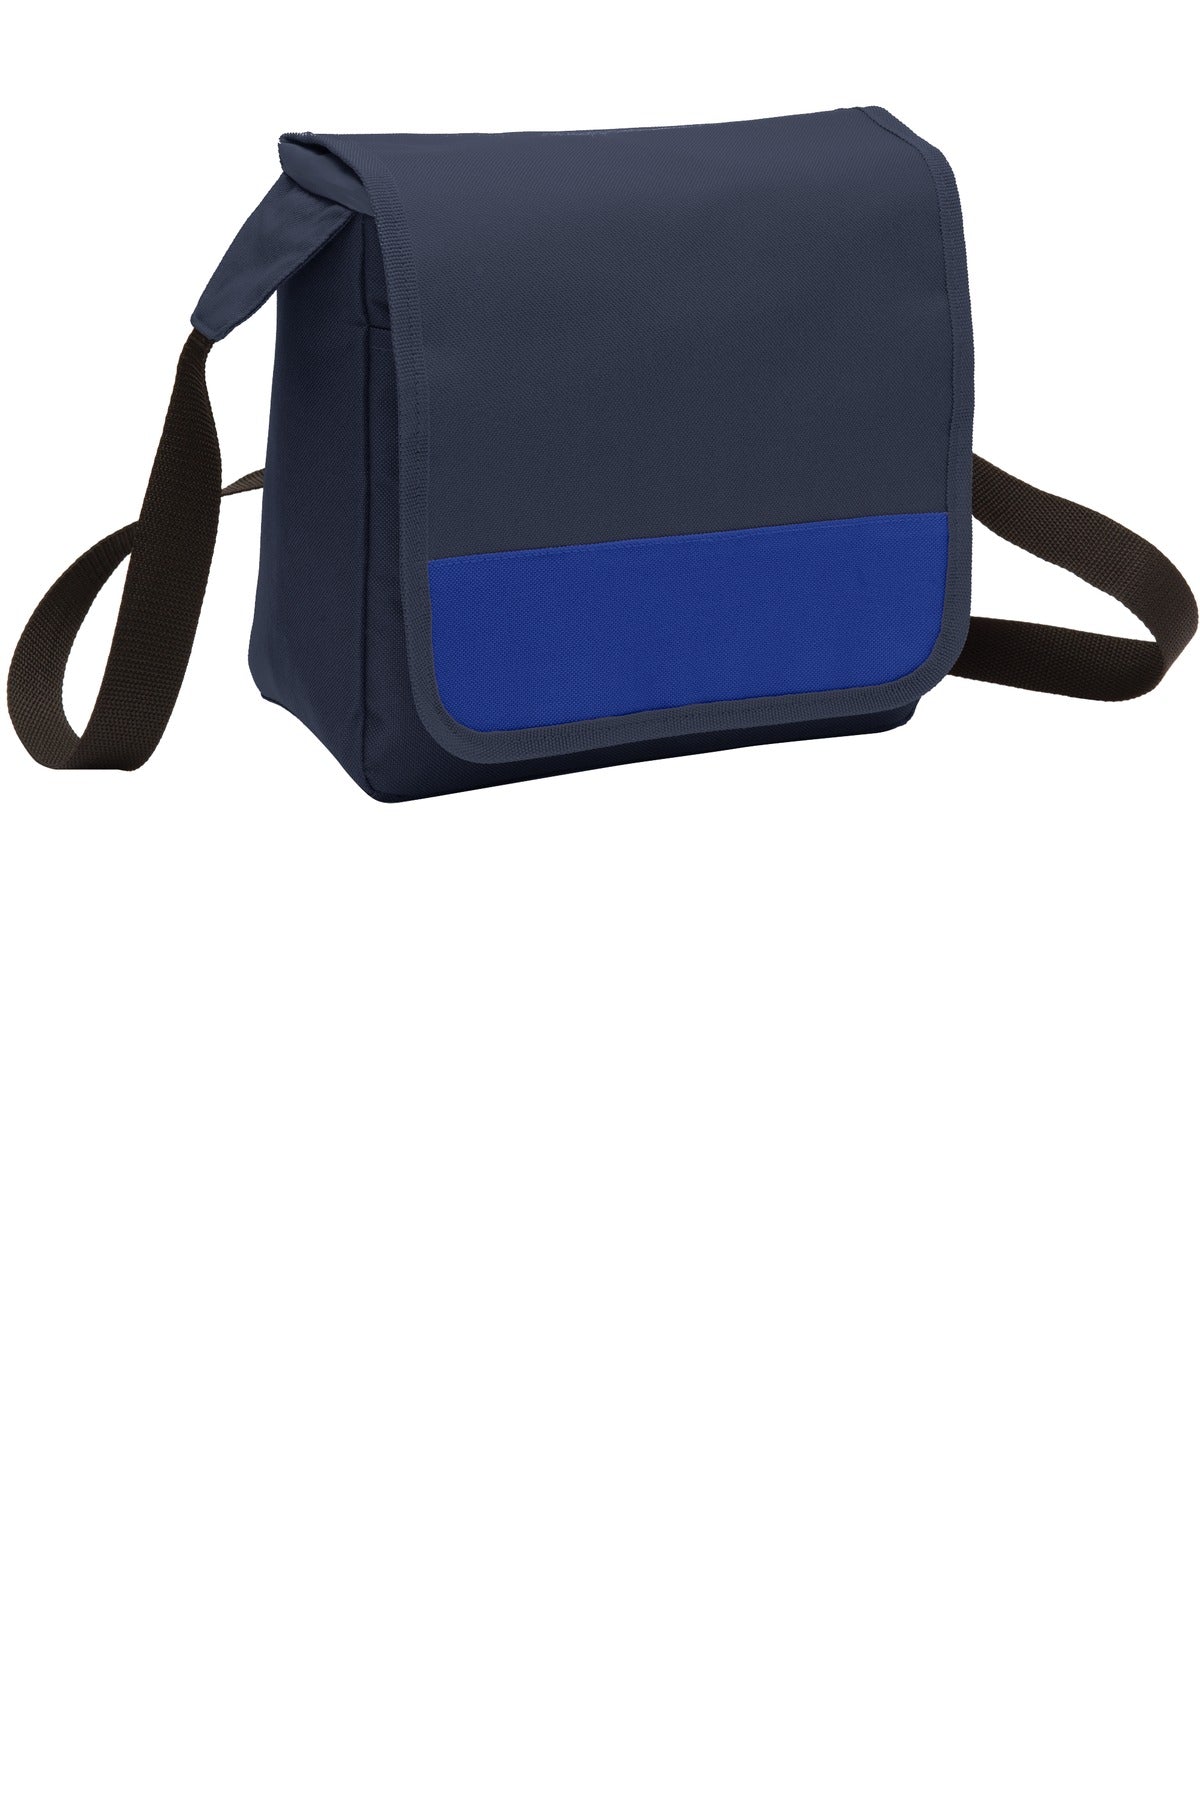 Bags Navy/ Twilight Blue OSFA Port Authority